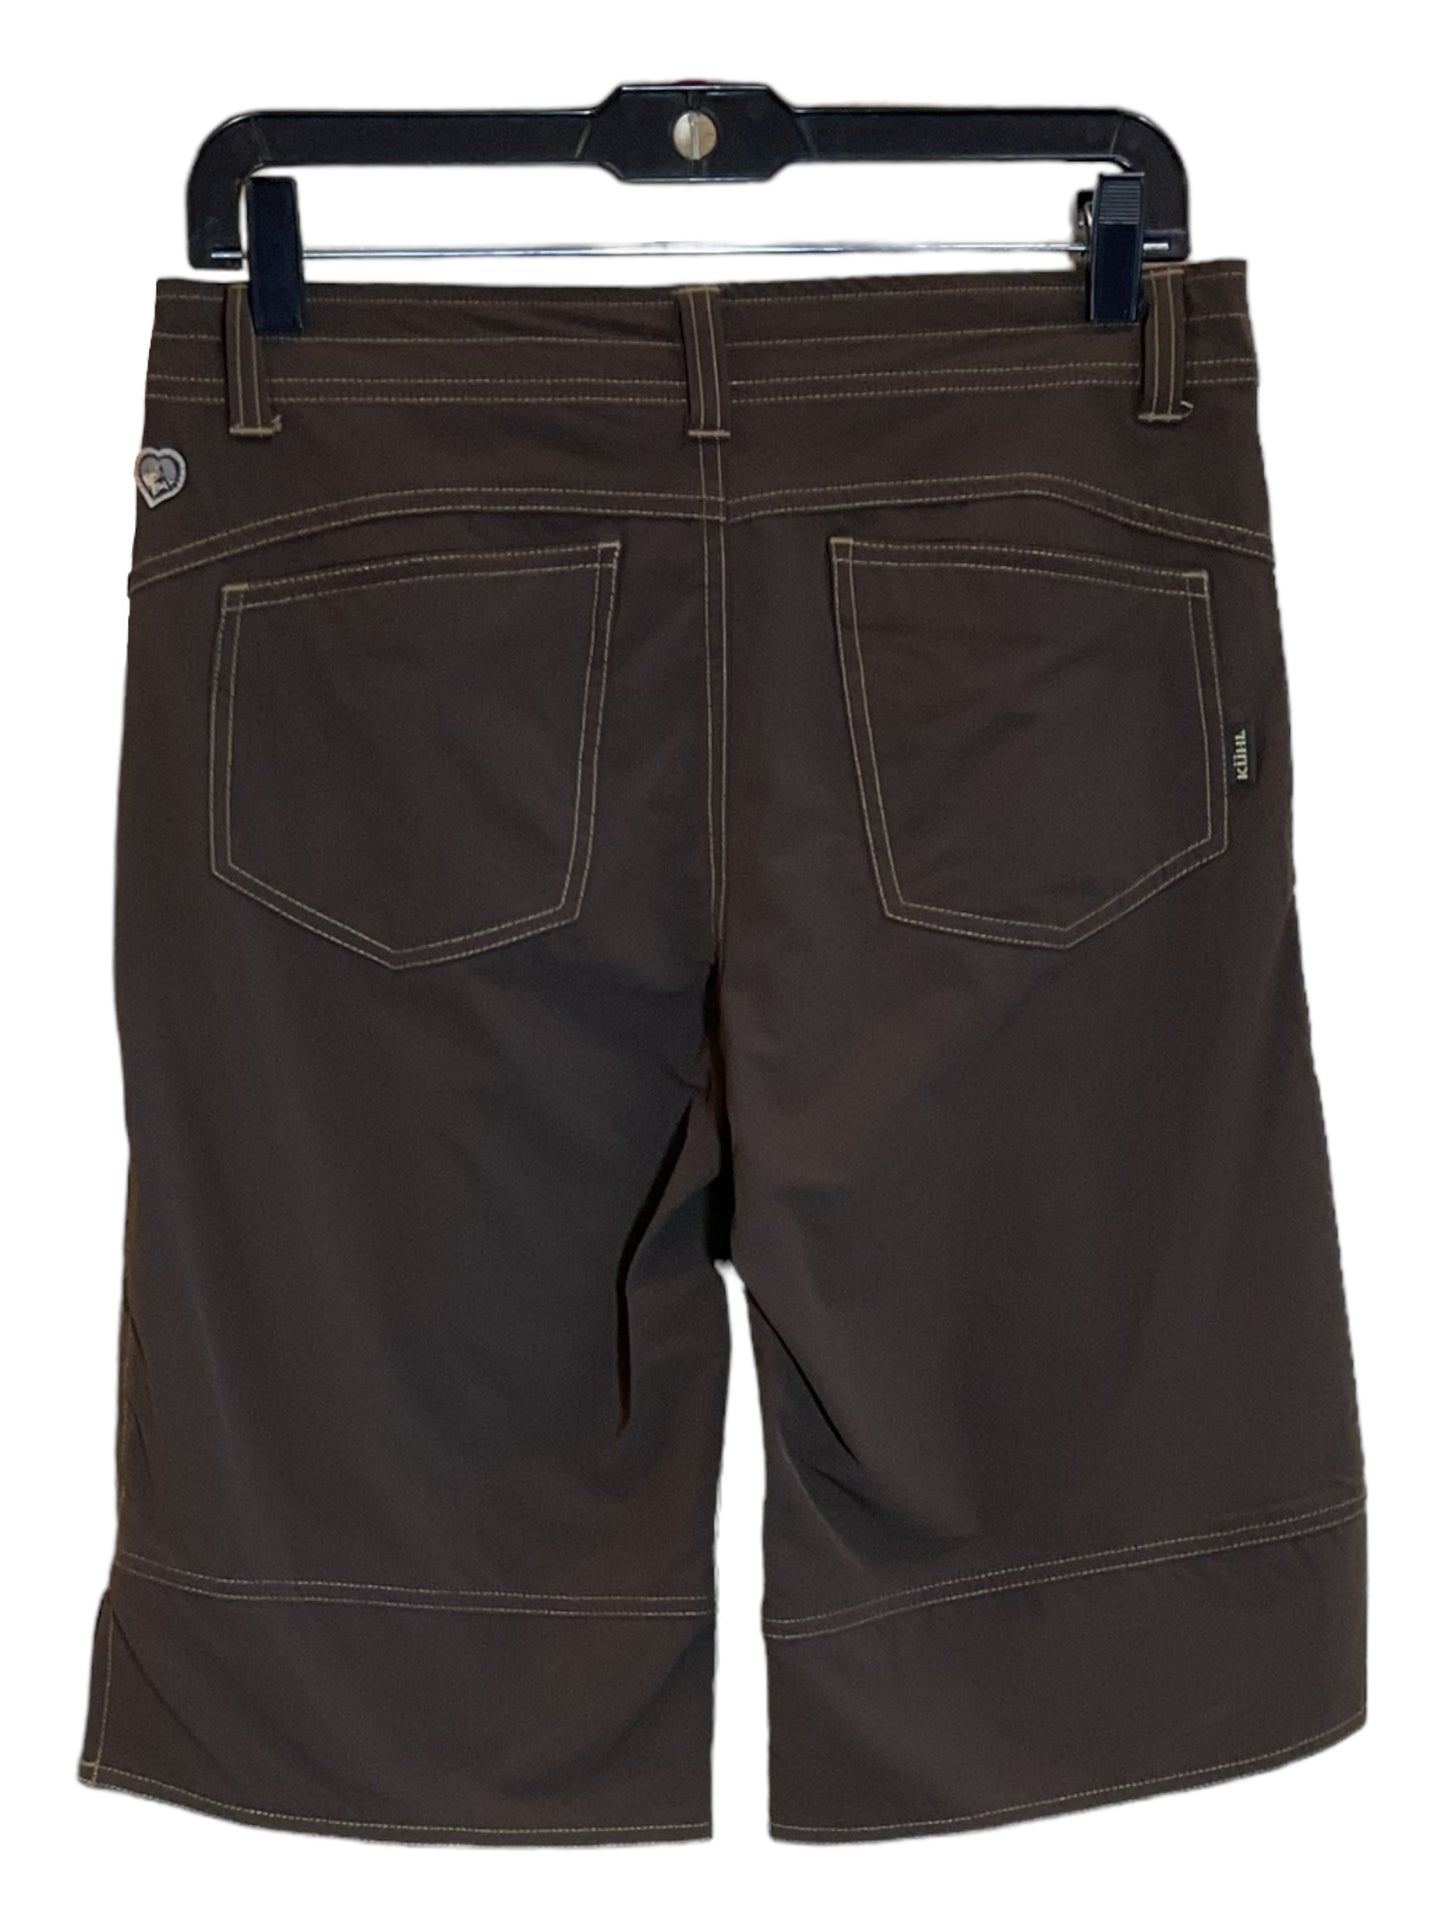 Shorts By Kuhl  Size: 6